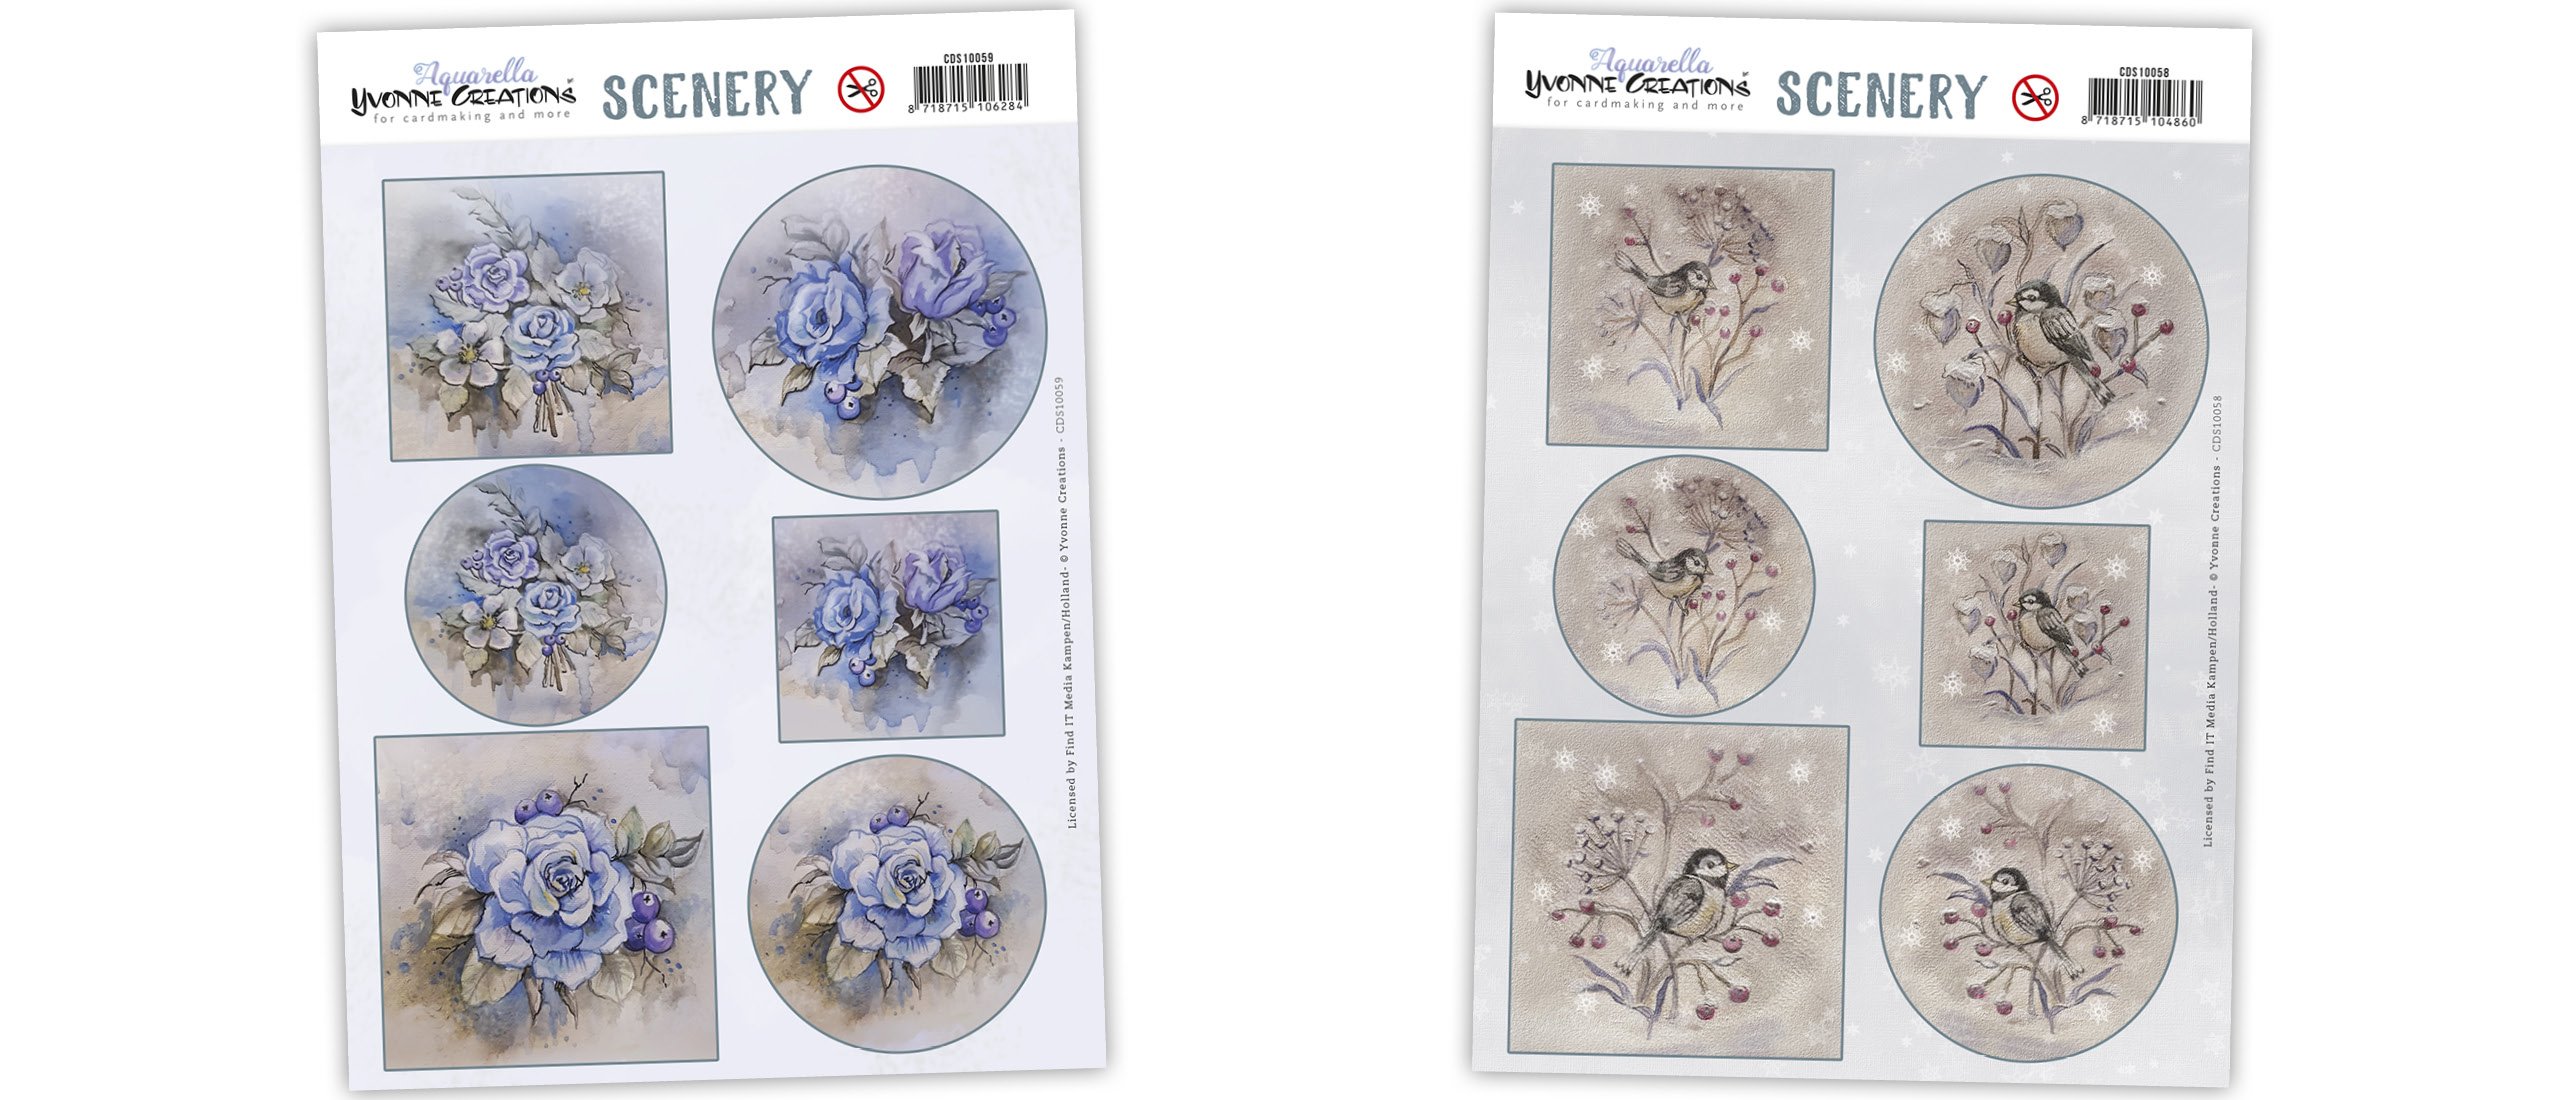 Nieuwe Scenery - Yvonne Creations - Aquarella met Wintervogels en bloemen